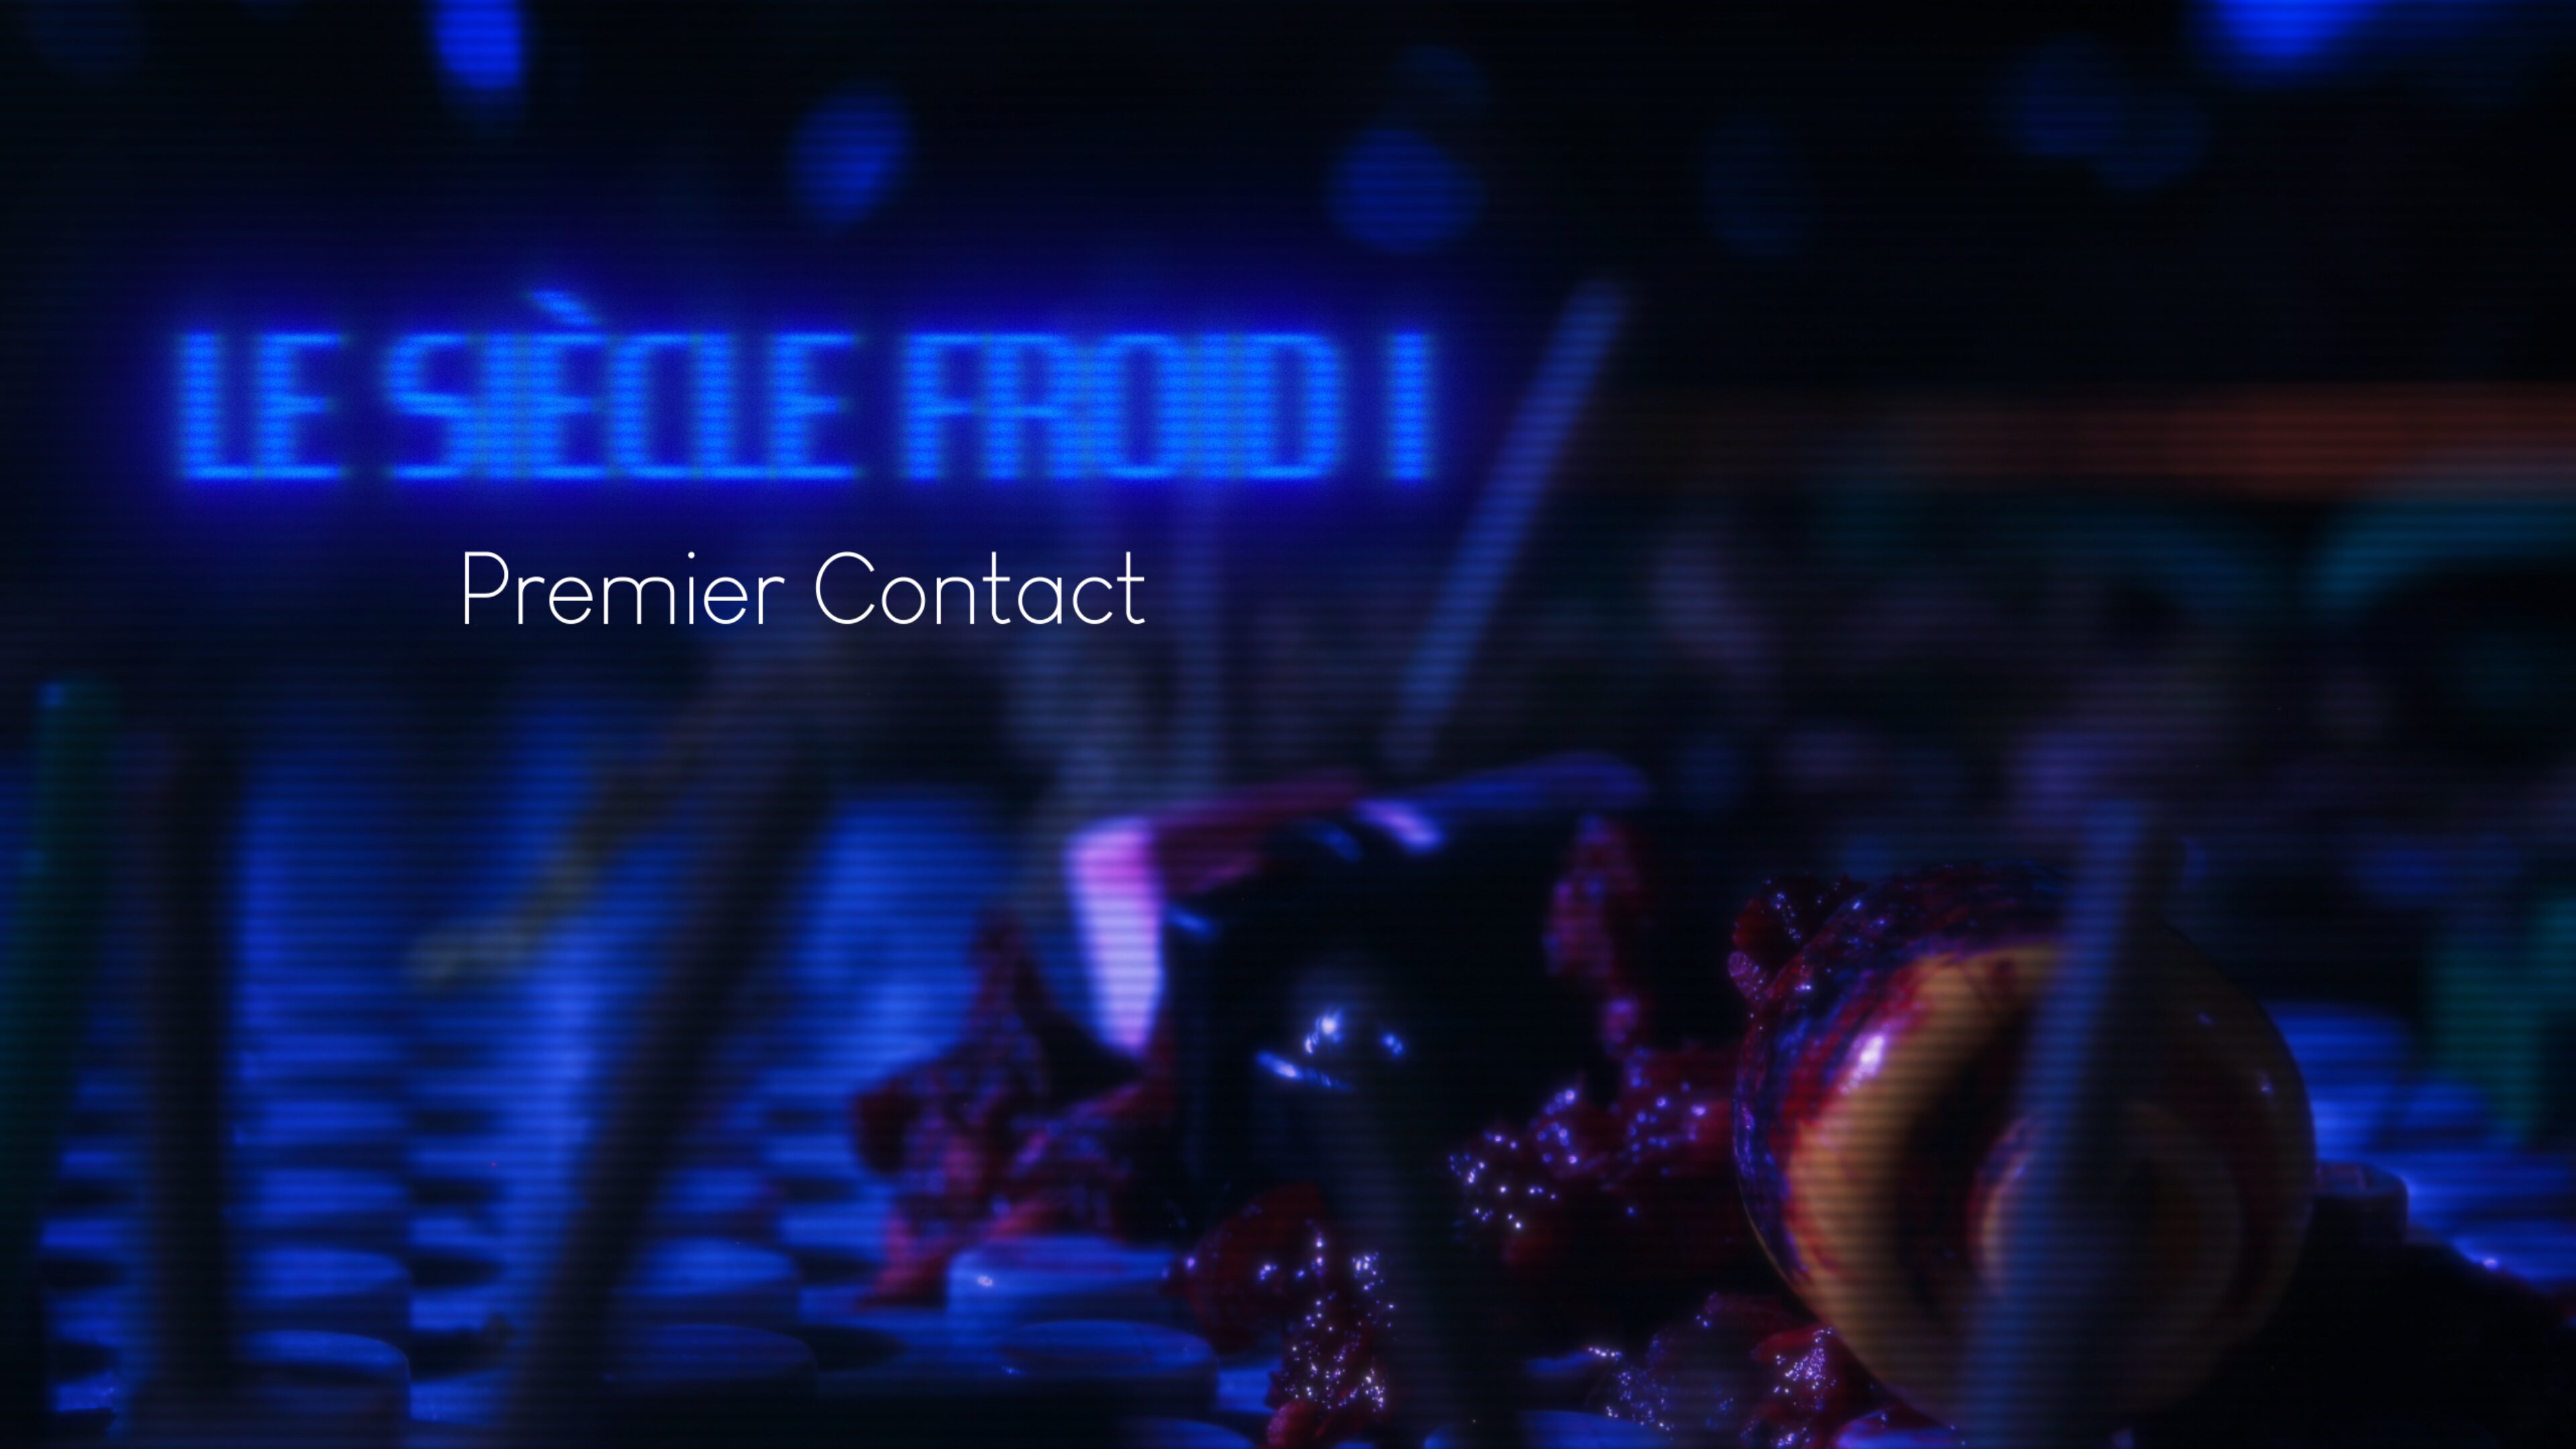 Le Siècle Froid 1 - Premier Contact